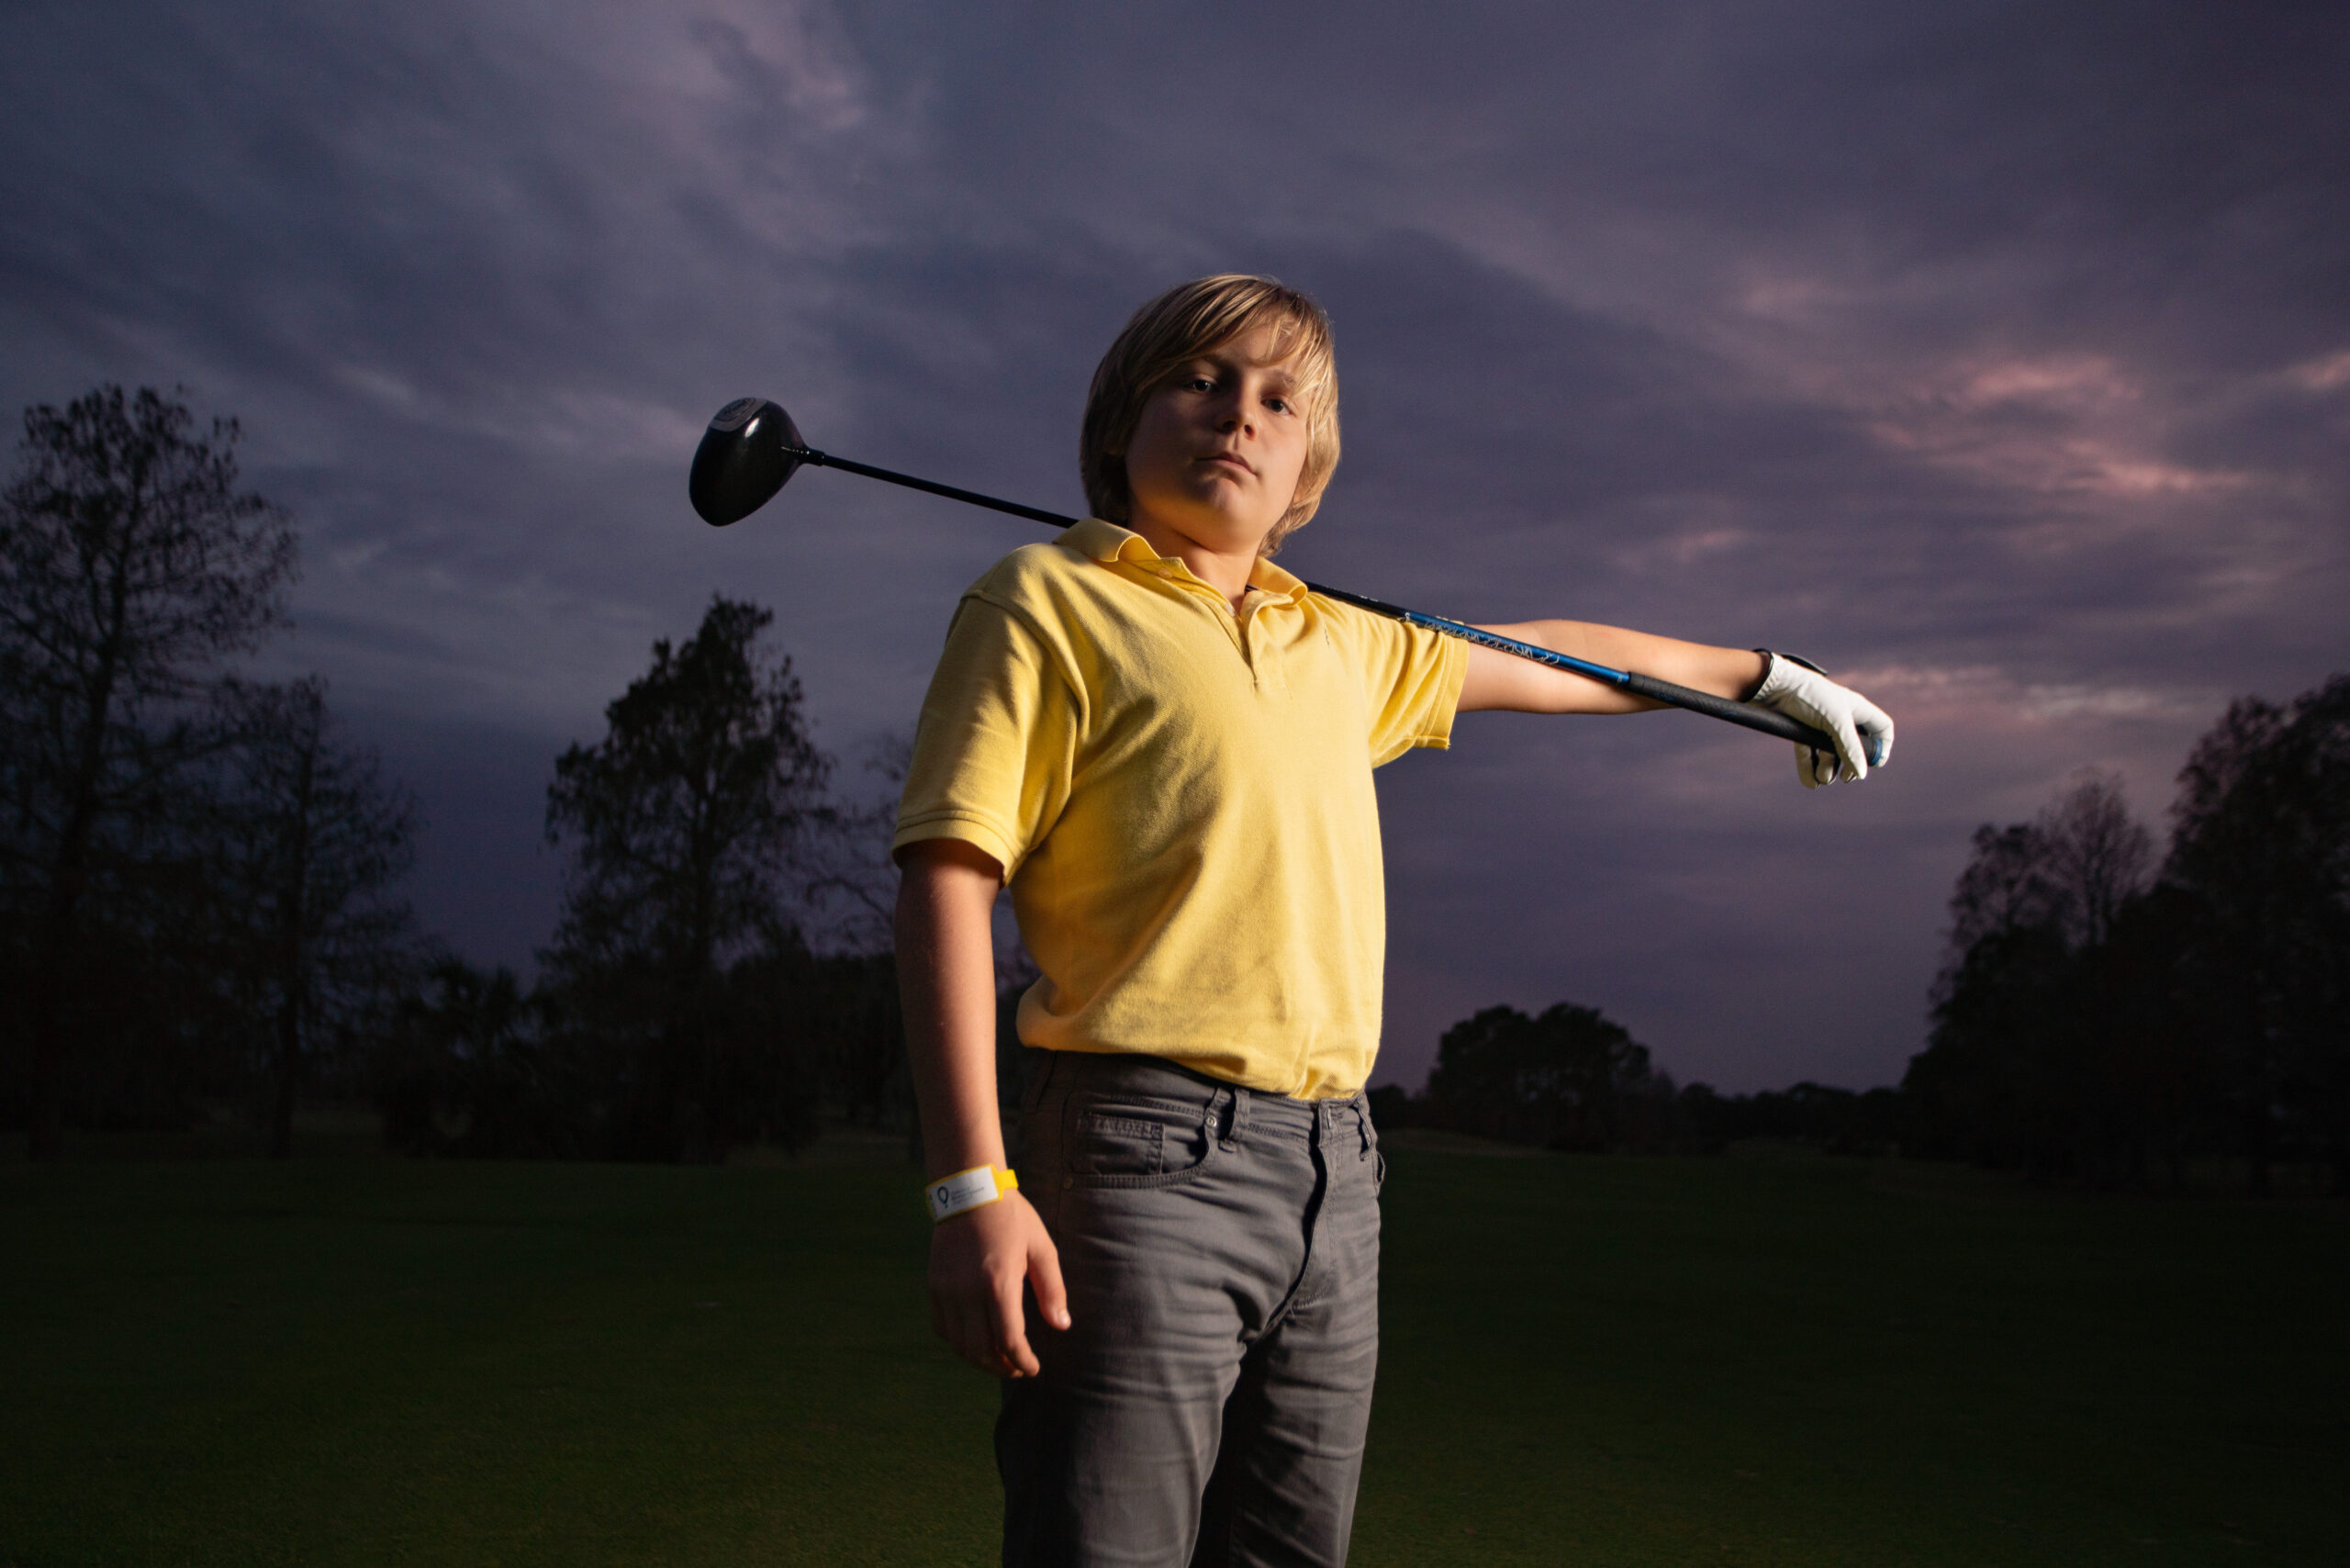 high speed sync portrait of child golfer advertising scaled Children